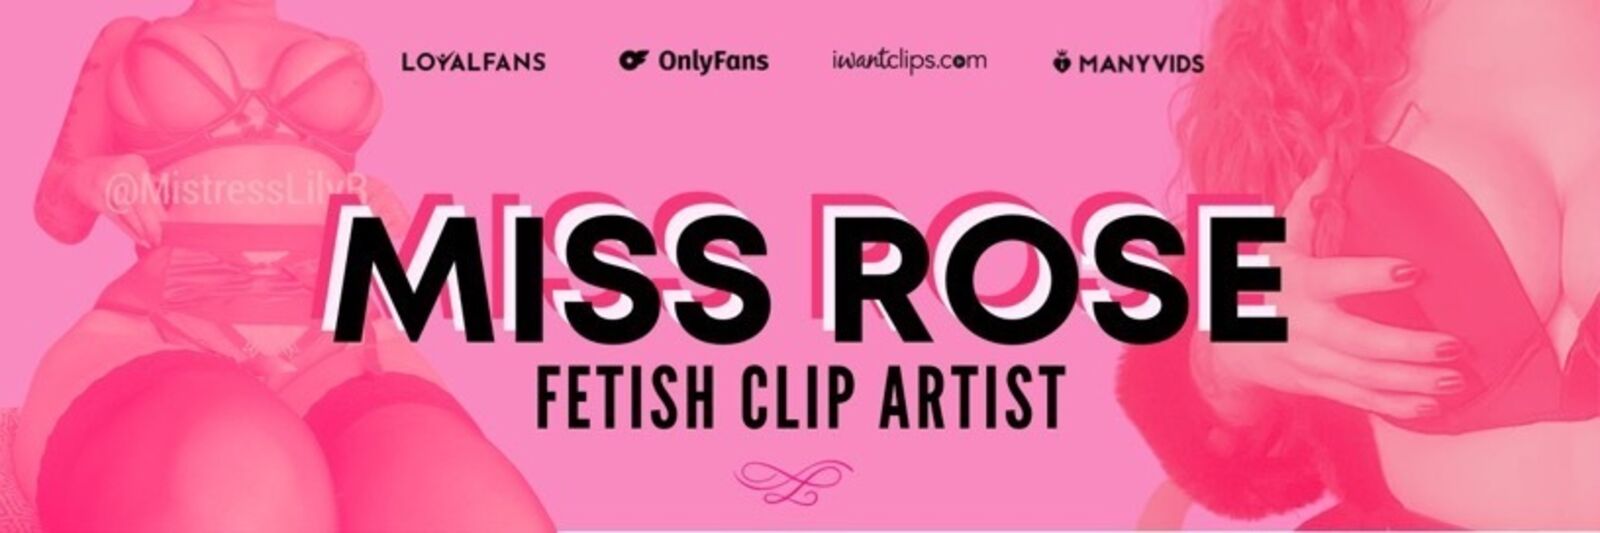 See Miss Rose profile